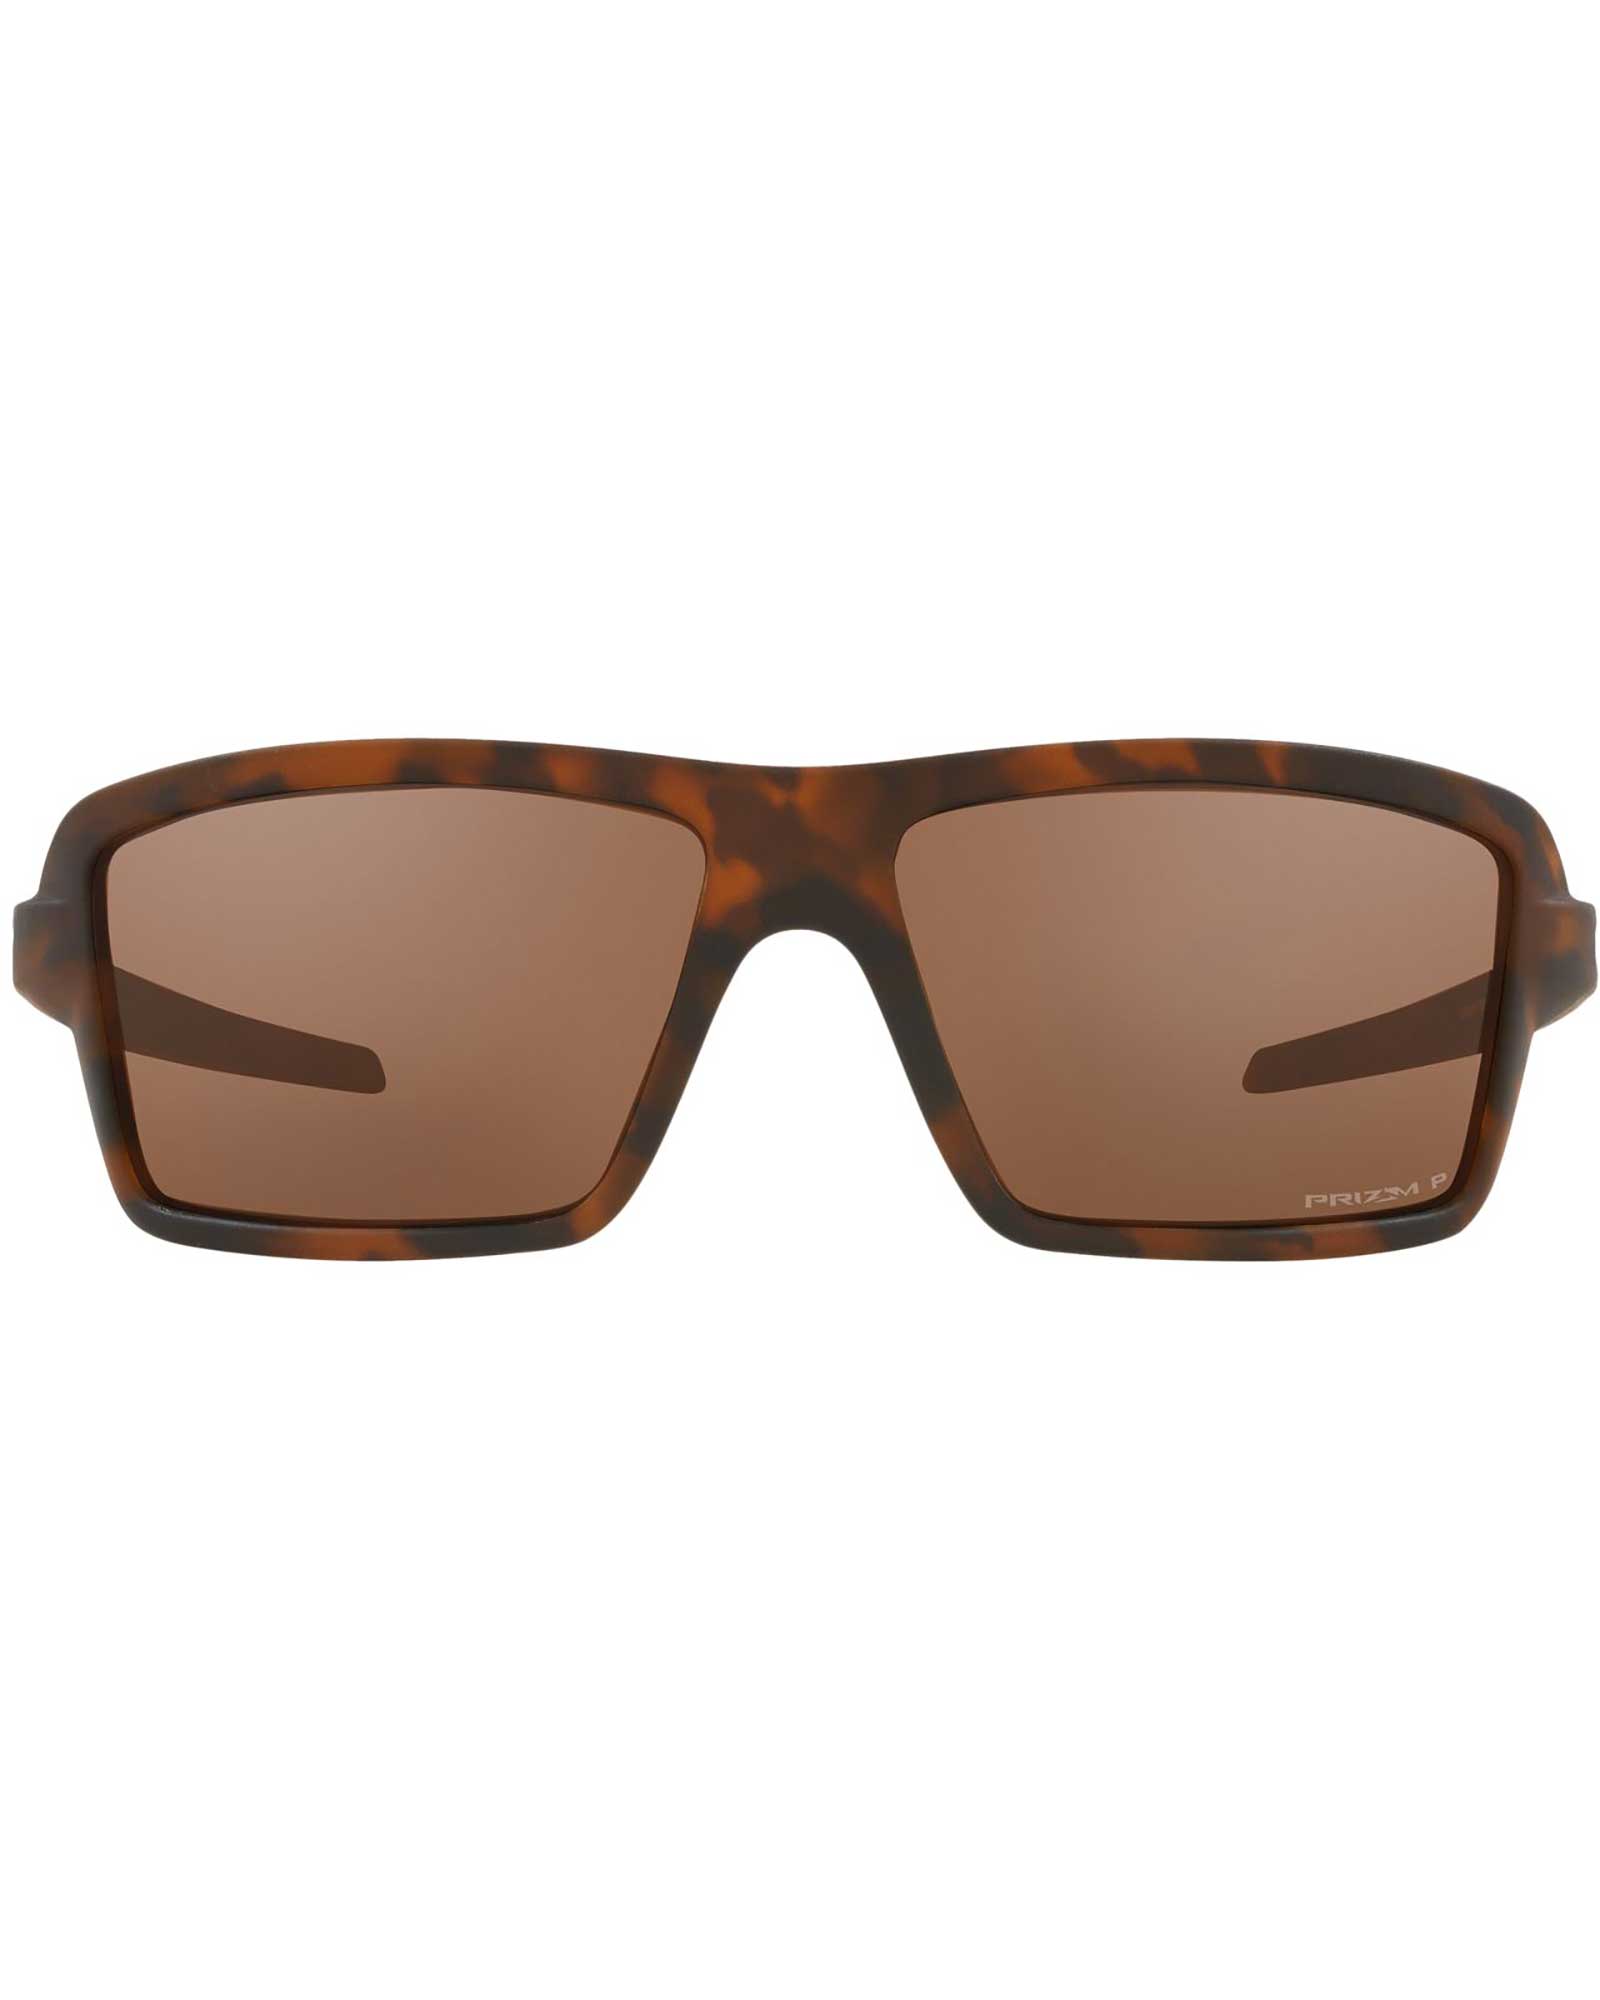 Oakley Cables Brown Tortoise / Prizm Tungsten Polarized Sunglasses - Brown Tortoise